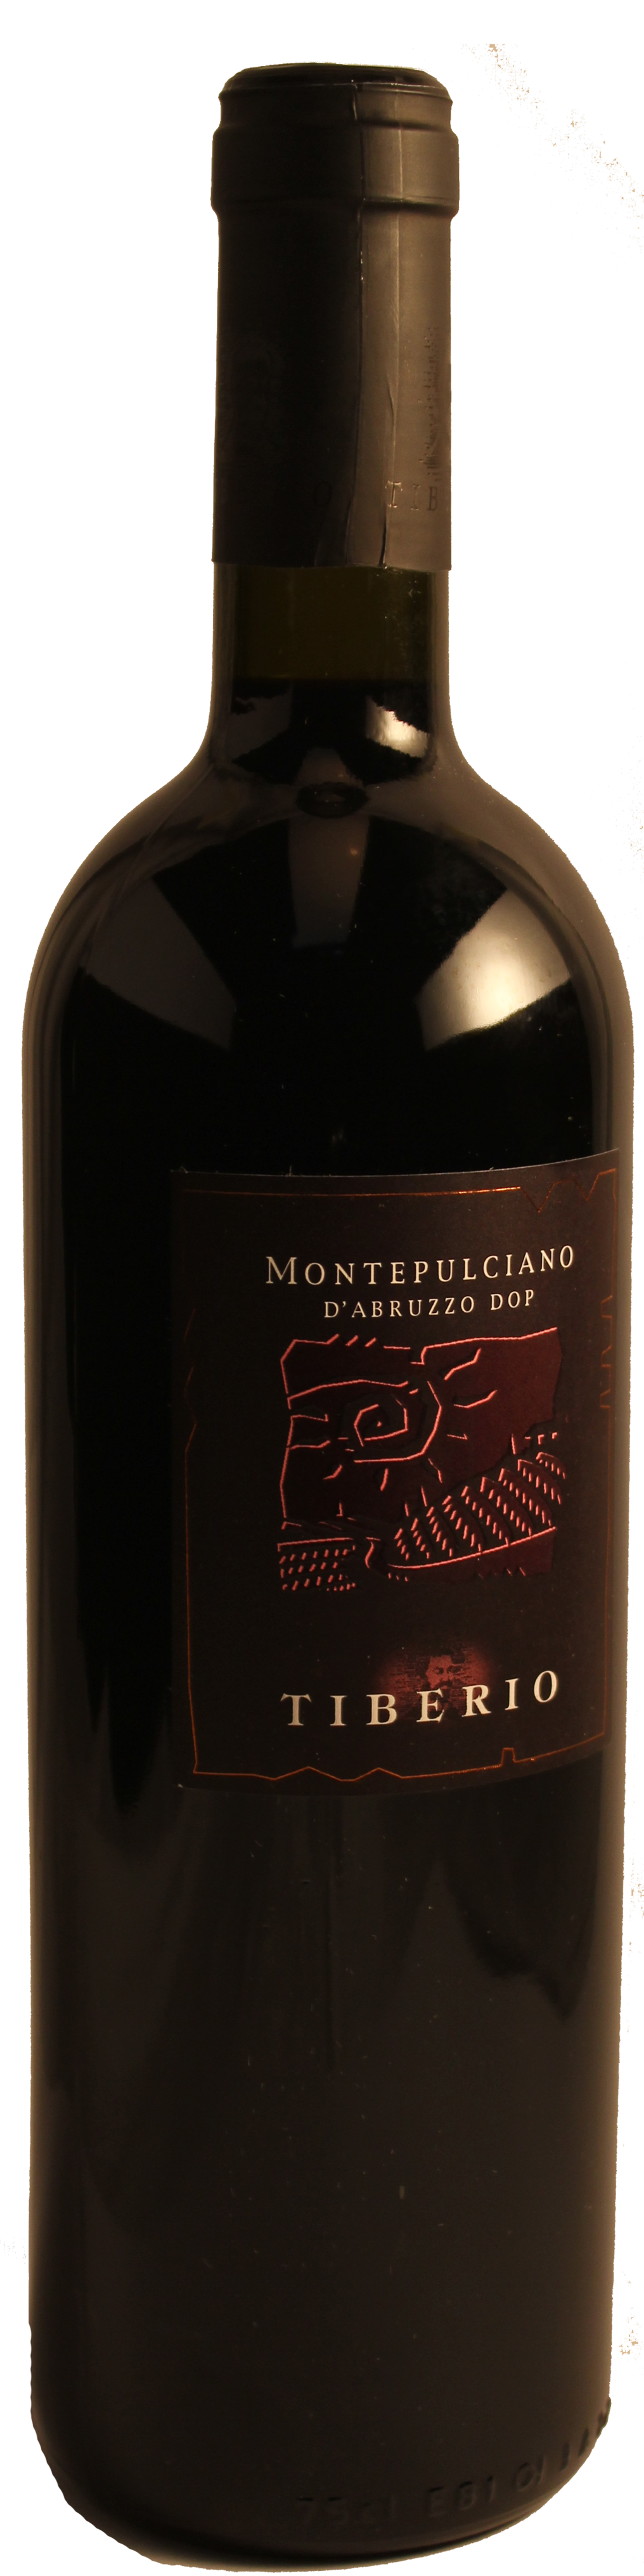 Bottle shot of 2011 Montepulciano d'Abruzzo